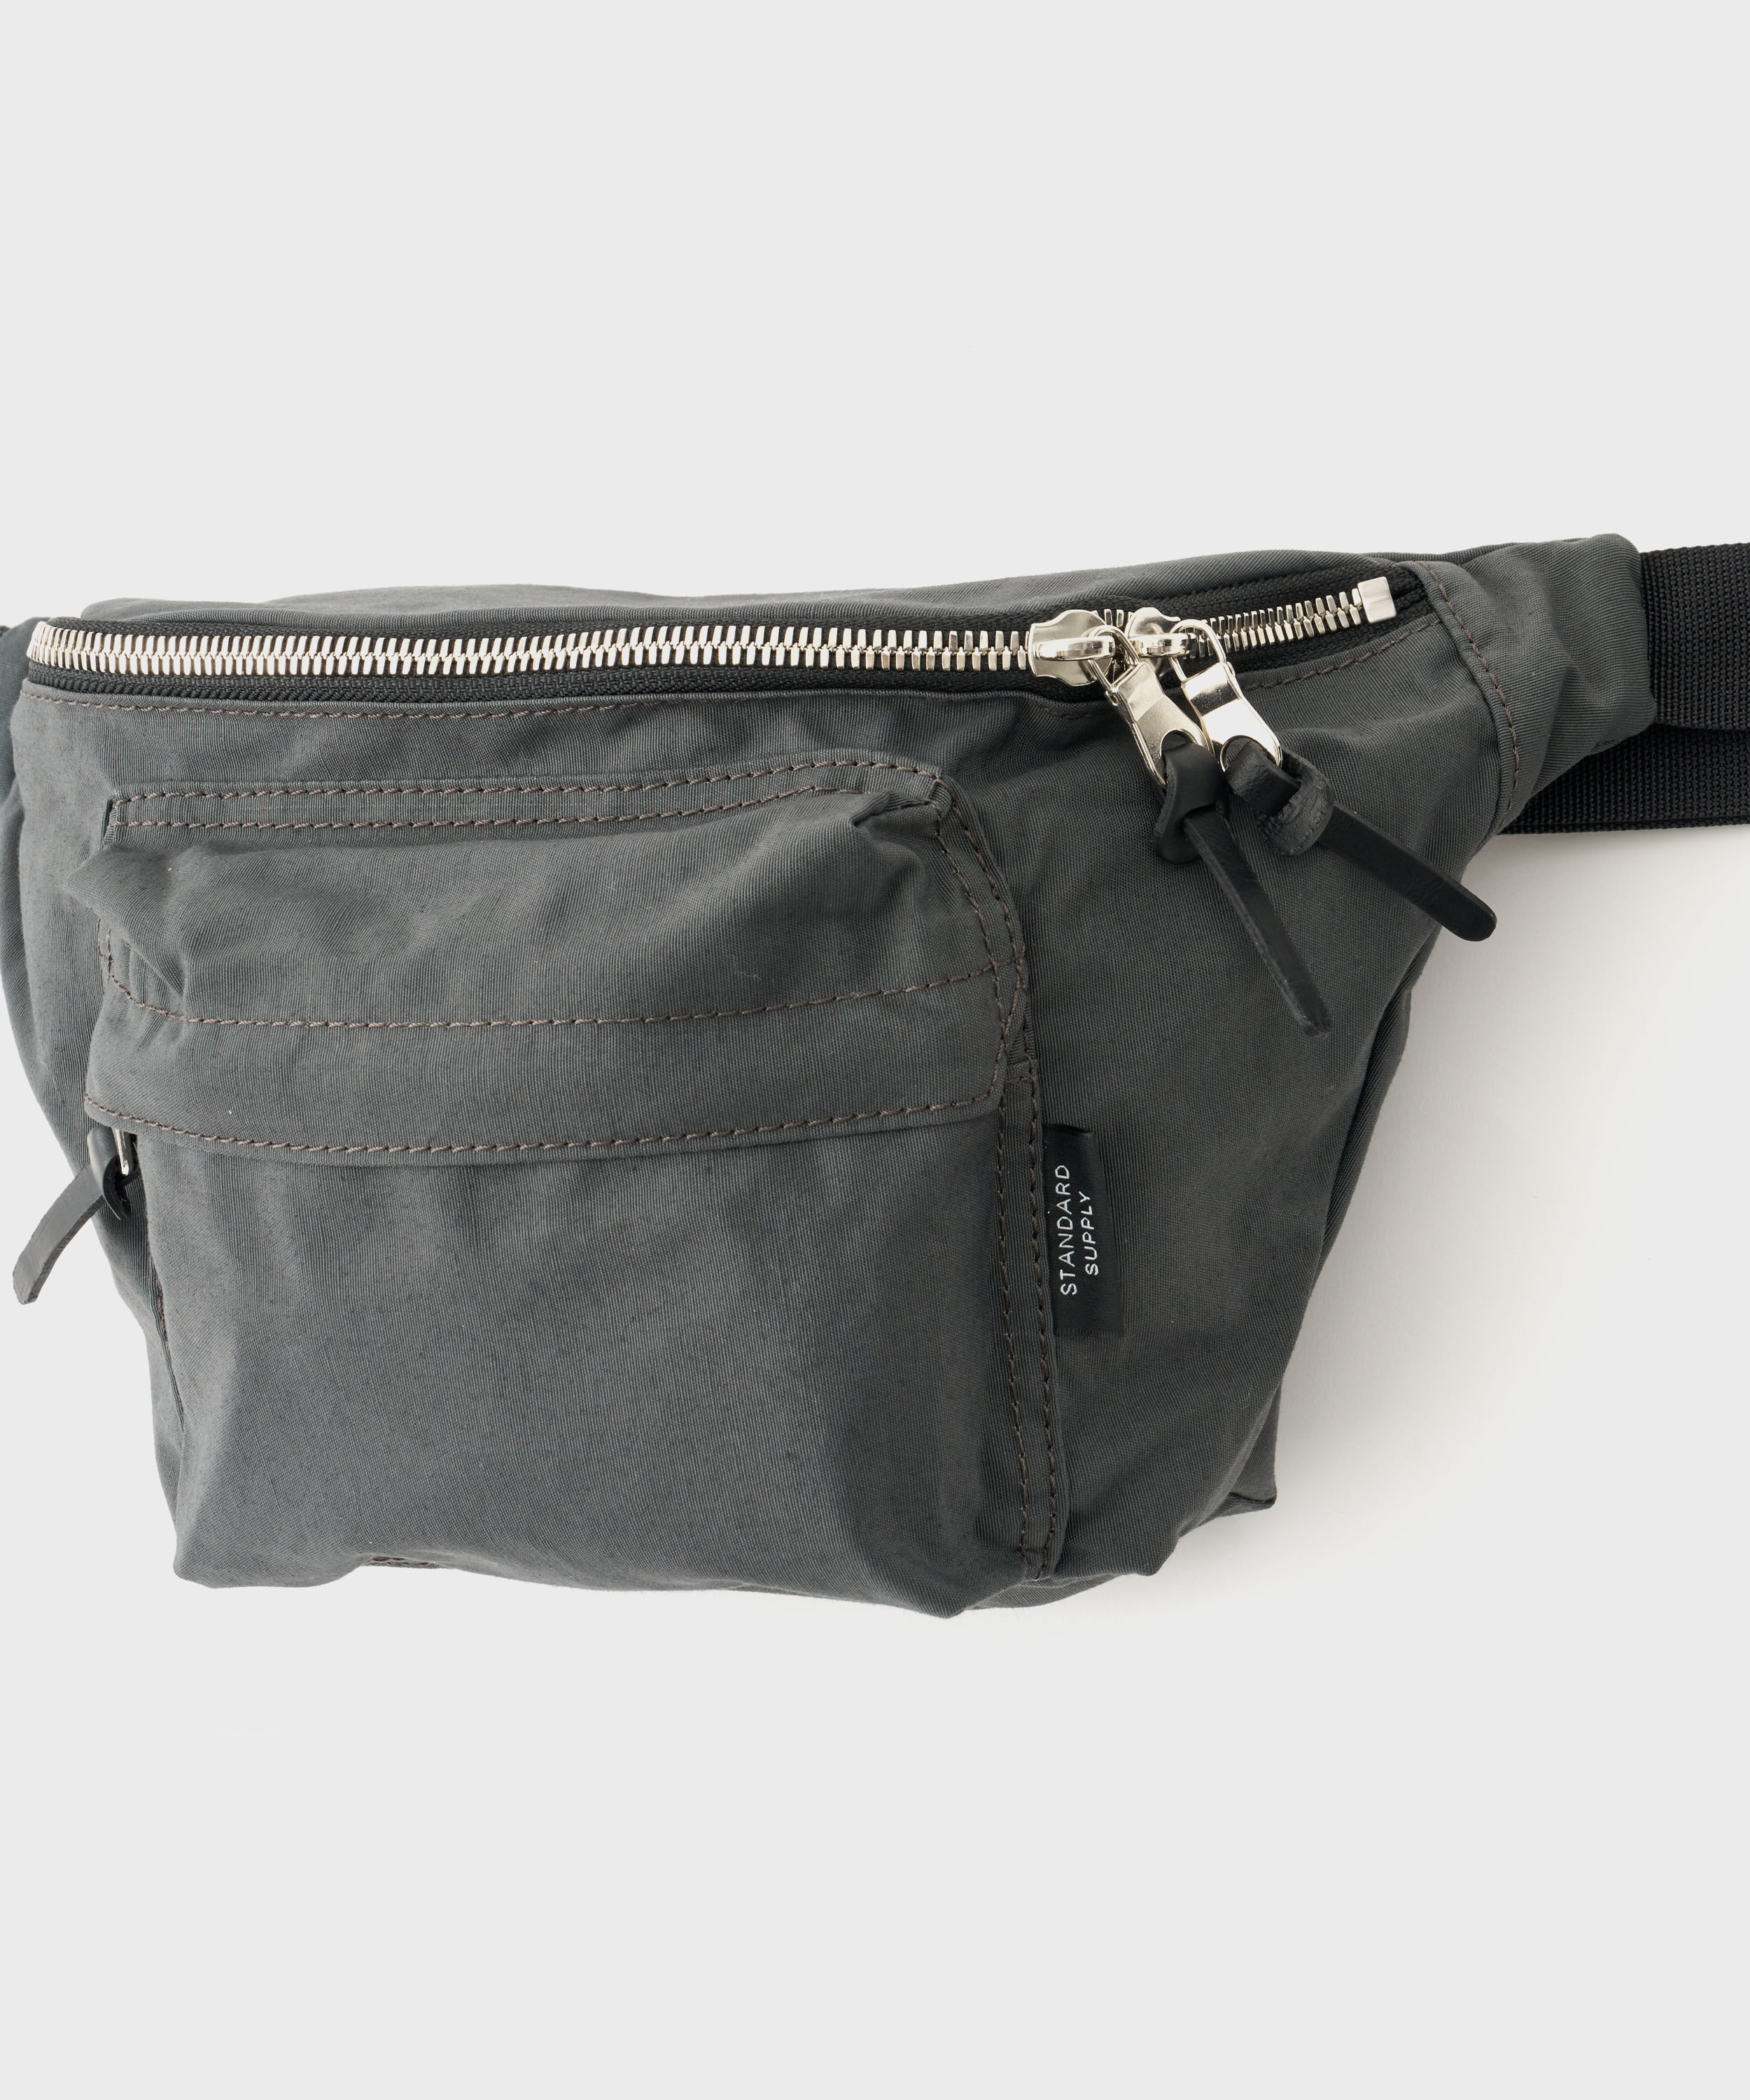 Simplicity Bum Bag (Steel Grey)